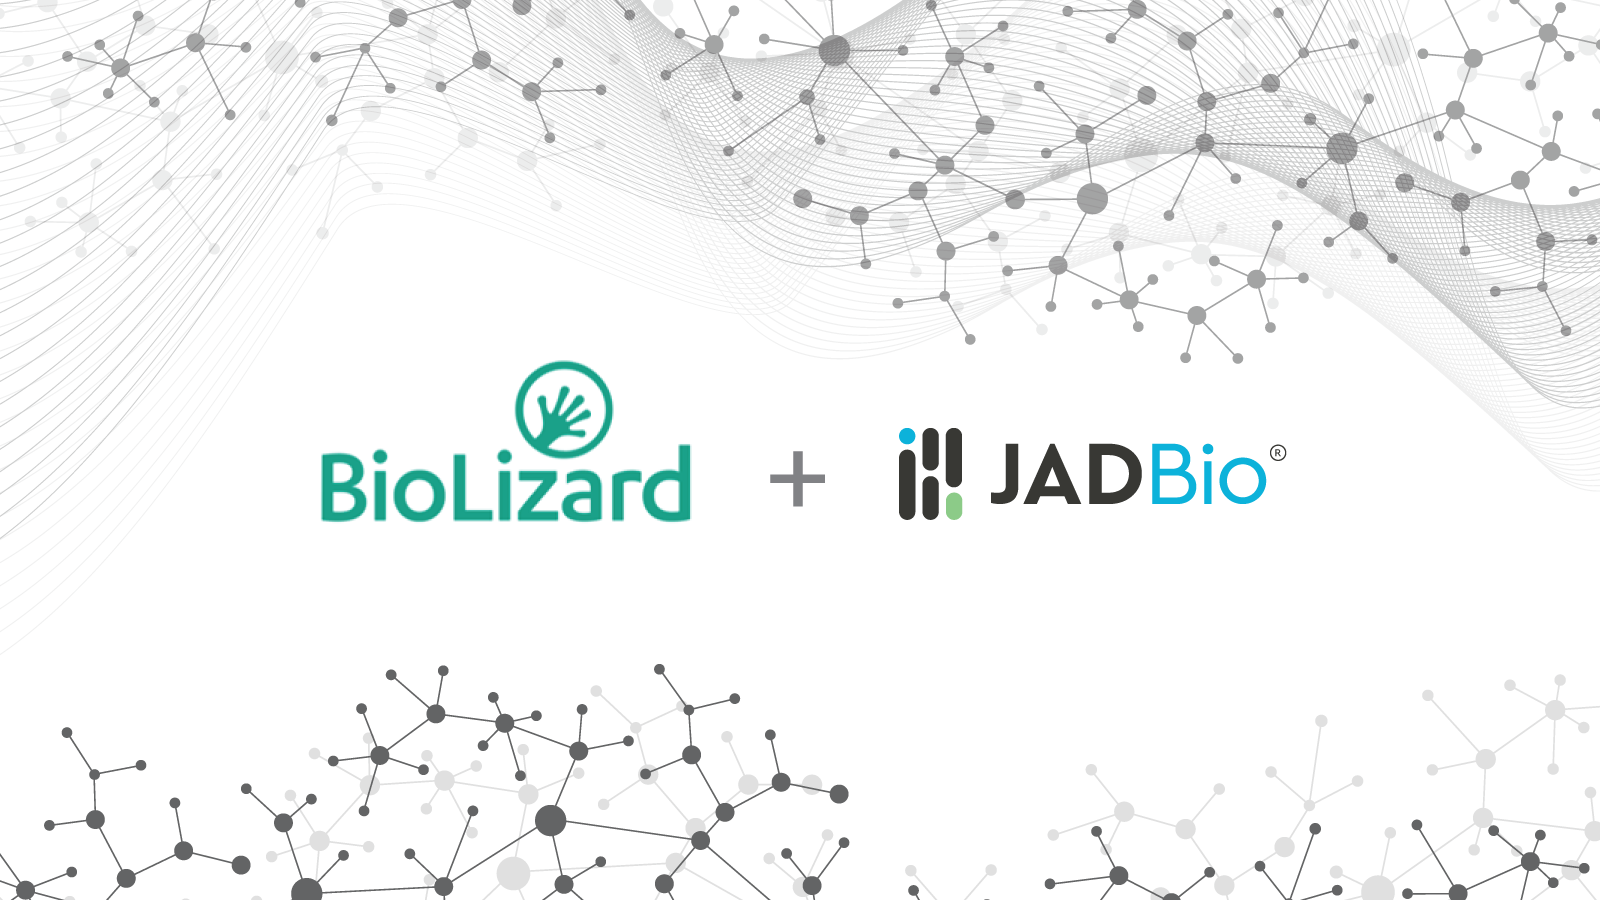 JADBio and Biolizard in partnership